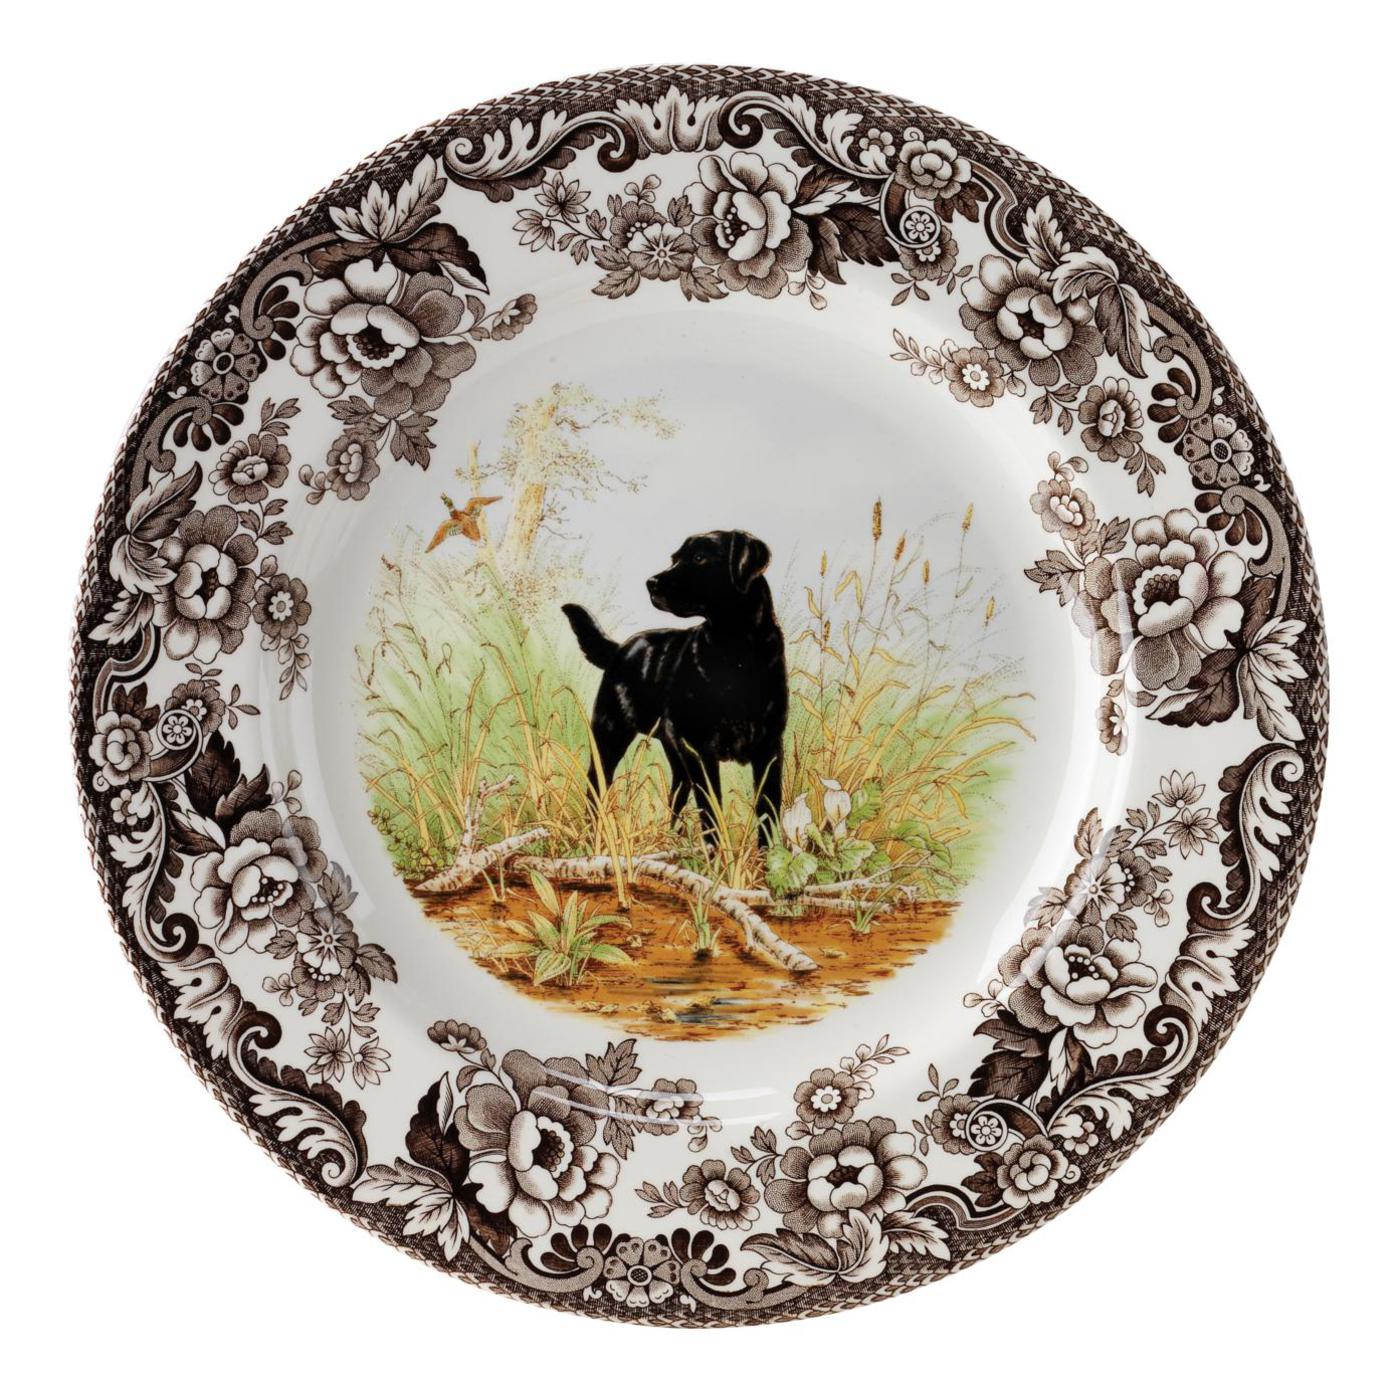 Woodland Dinner Plate 10.5 Inch, Black Labrador Retriever image number null